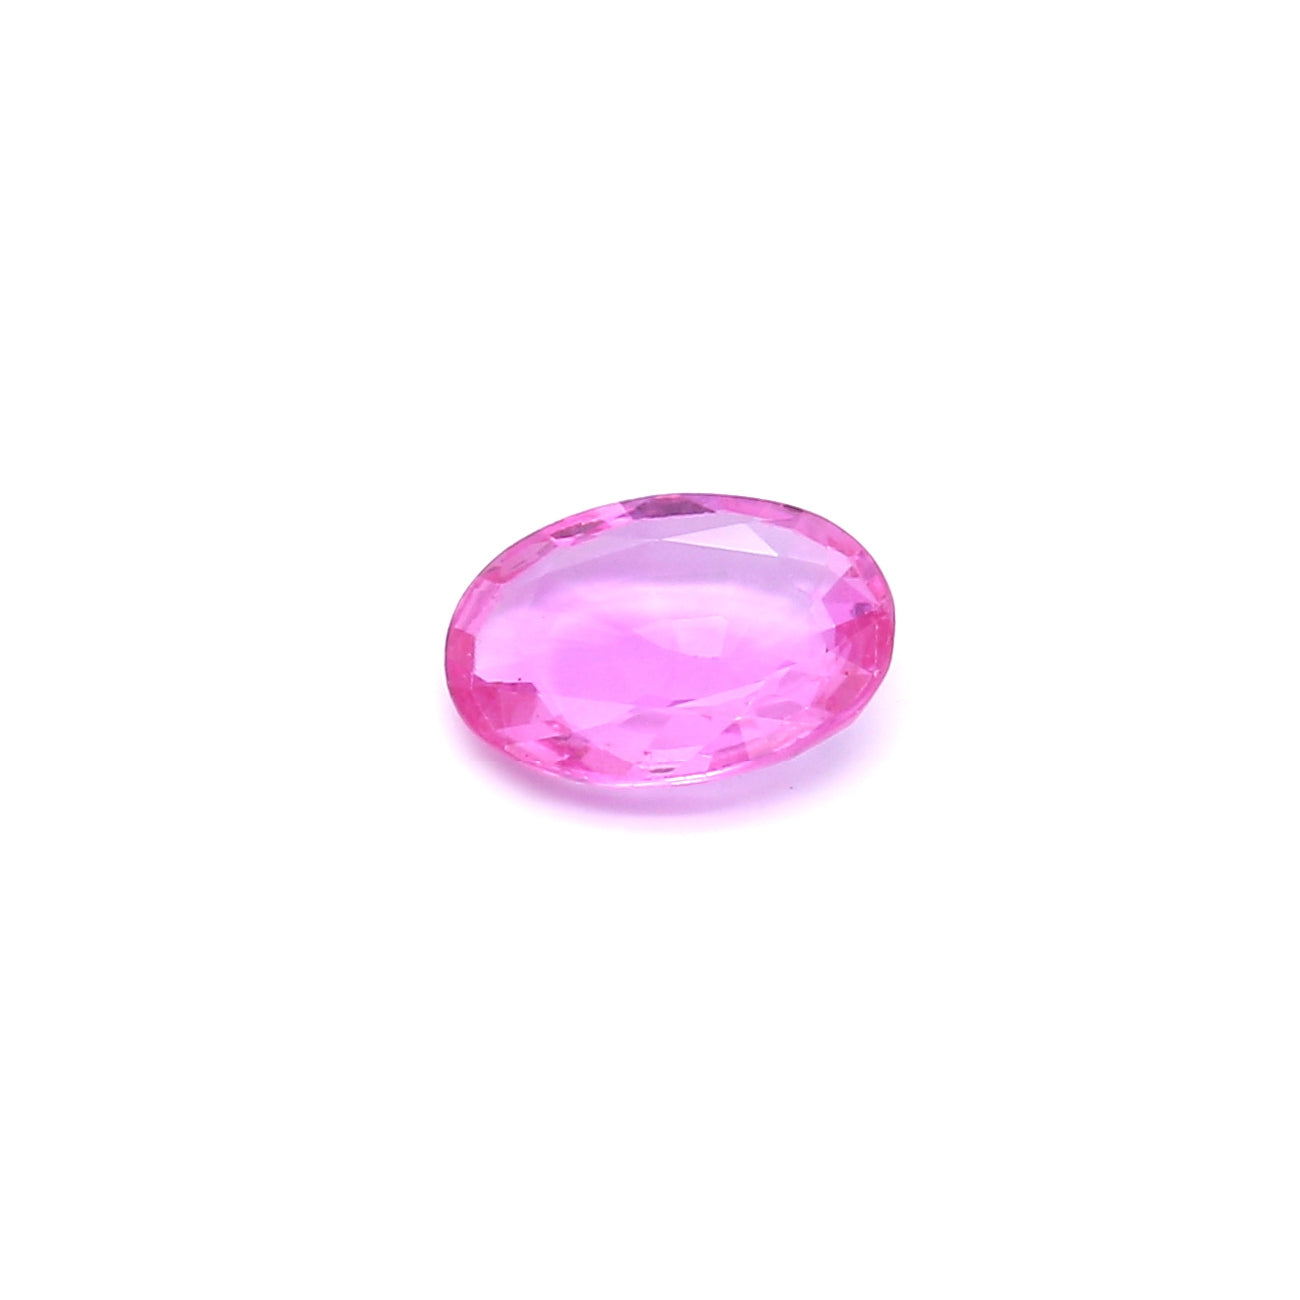 1.07ct Purplish Pink, Oval Sapphire, Heated, Madagascar - 8.01 x 5.98 x 2.22mm